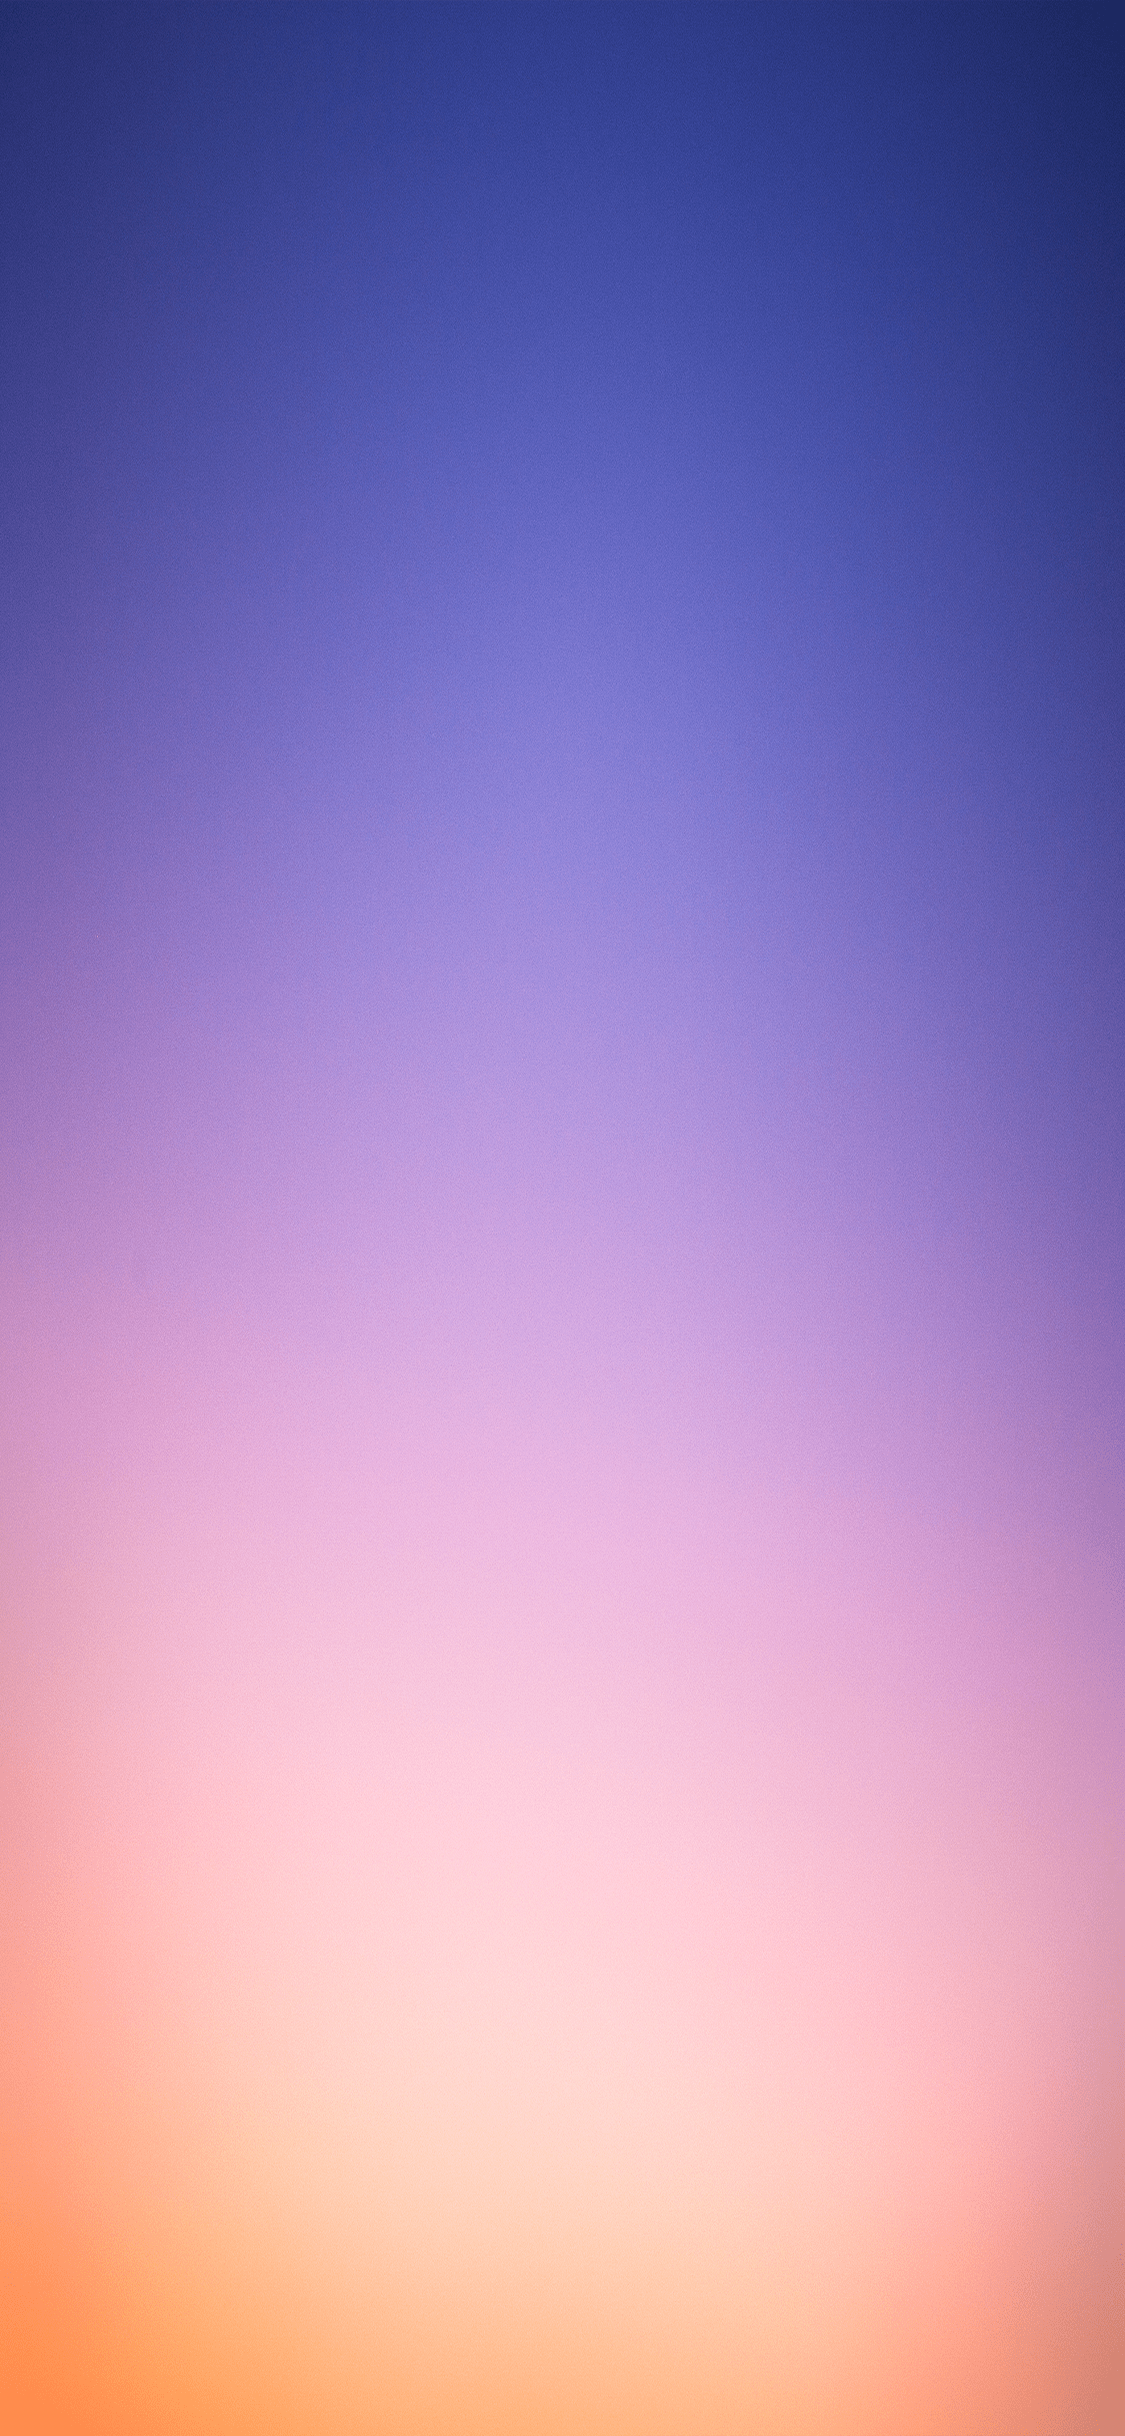 iphone standard wallpaper,himmel,blau,violett,tagsüber,lila